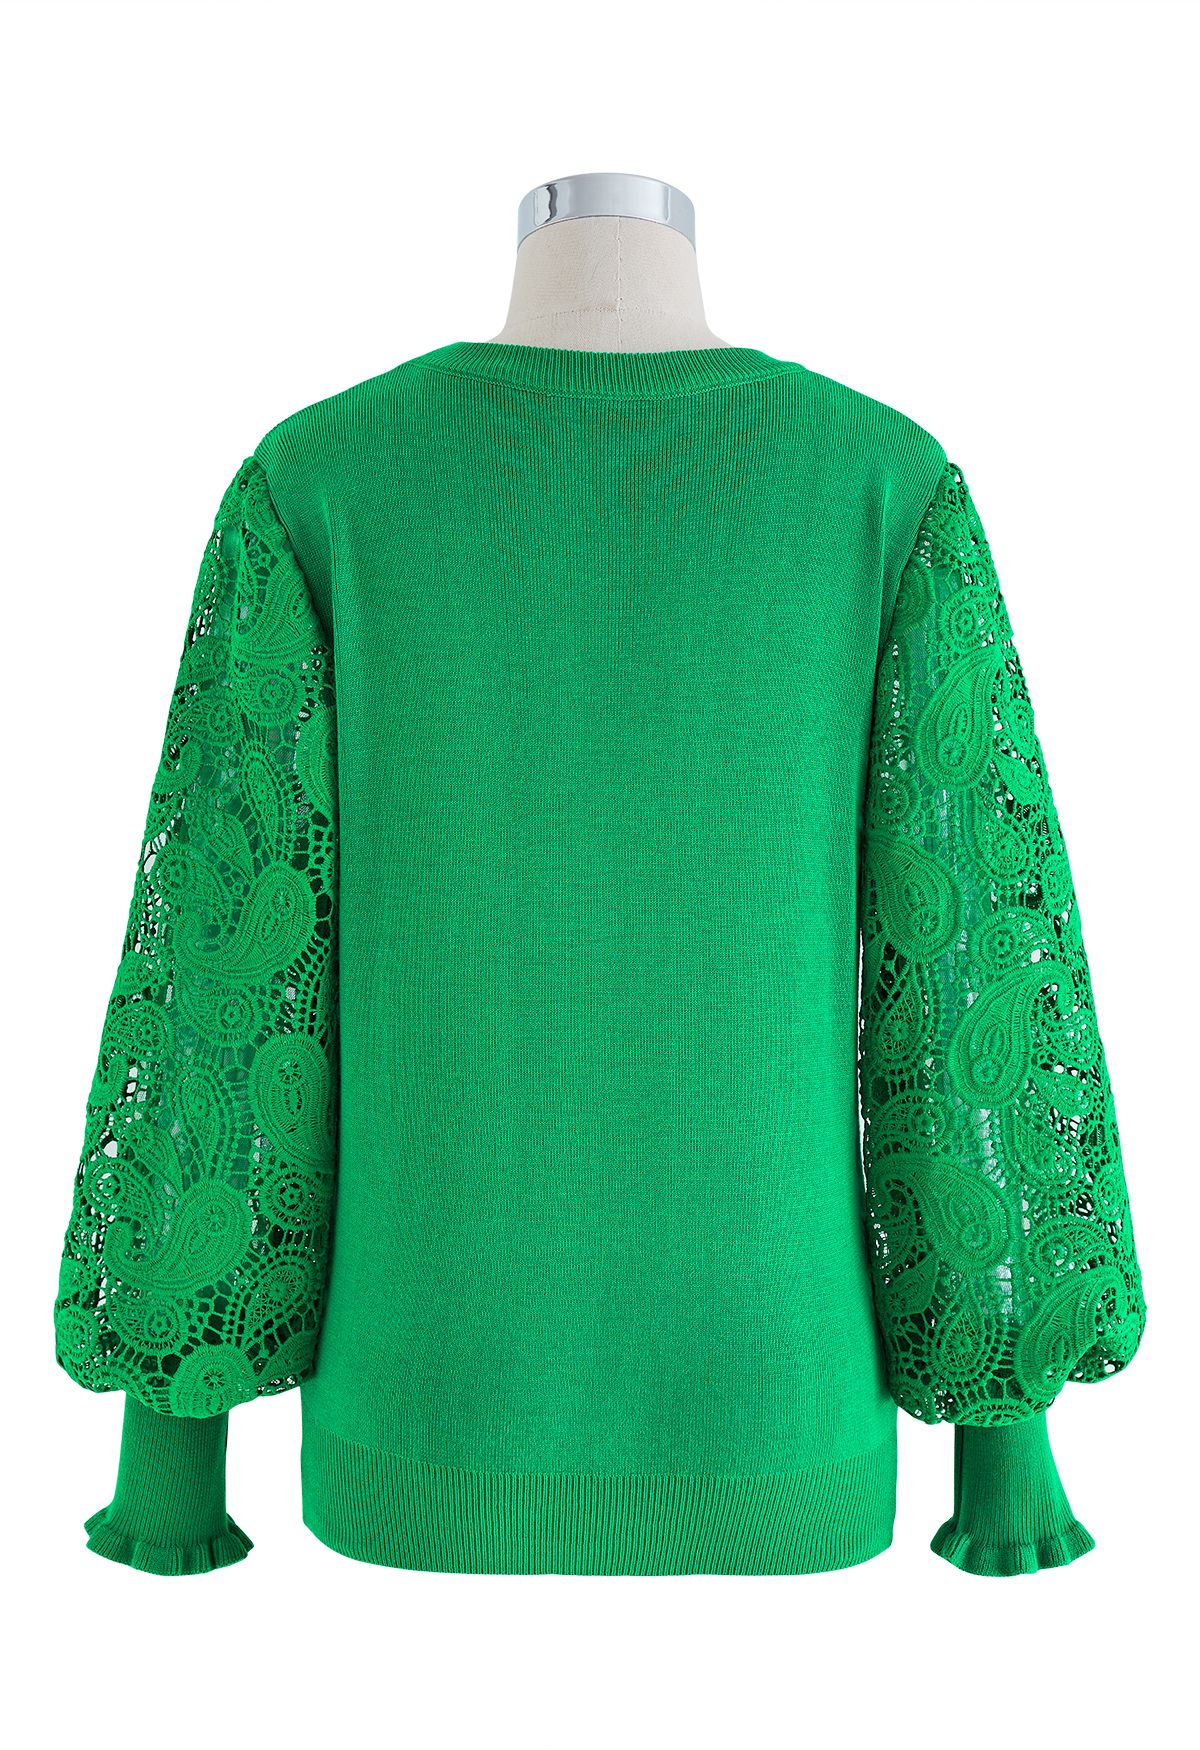 Paisley Crochet Sleeve Knit Top in Green